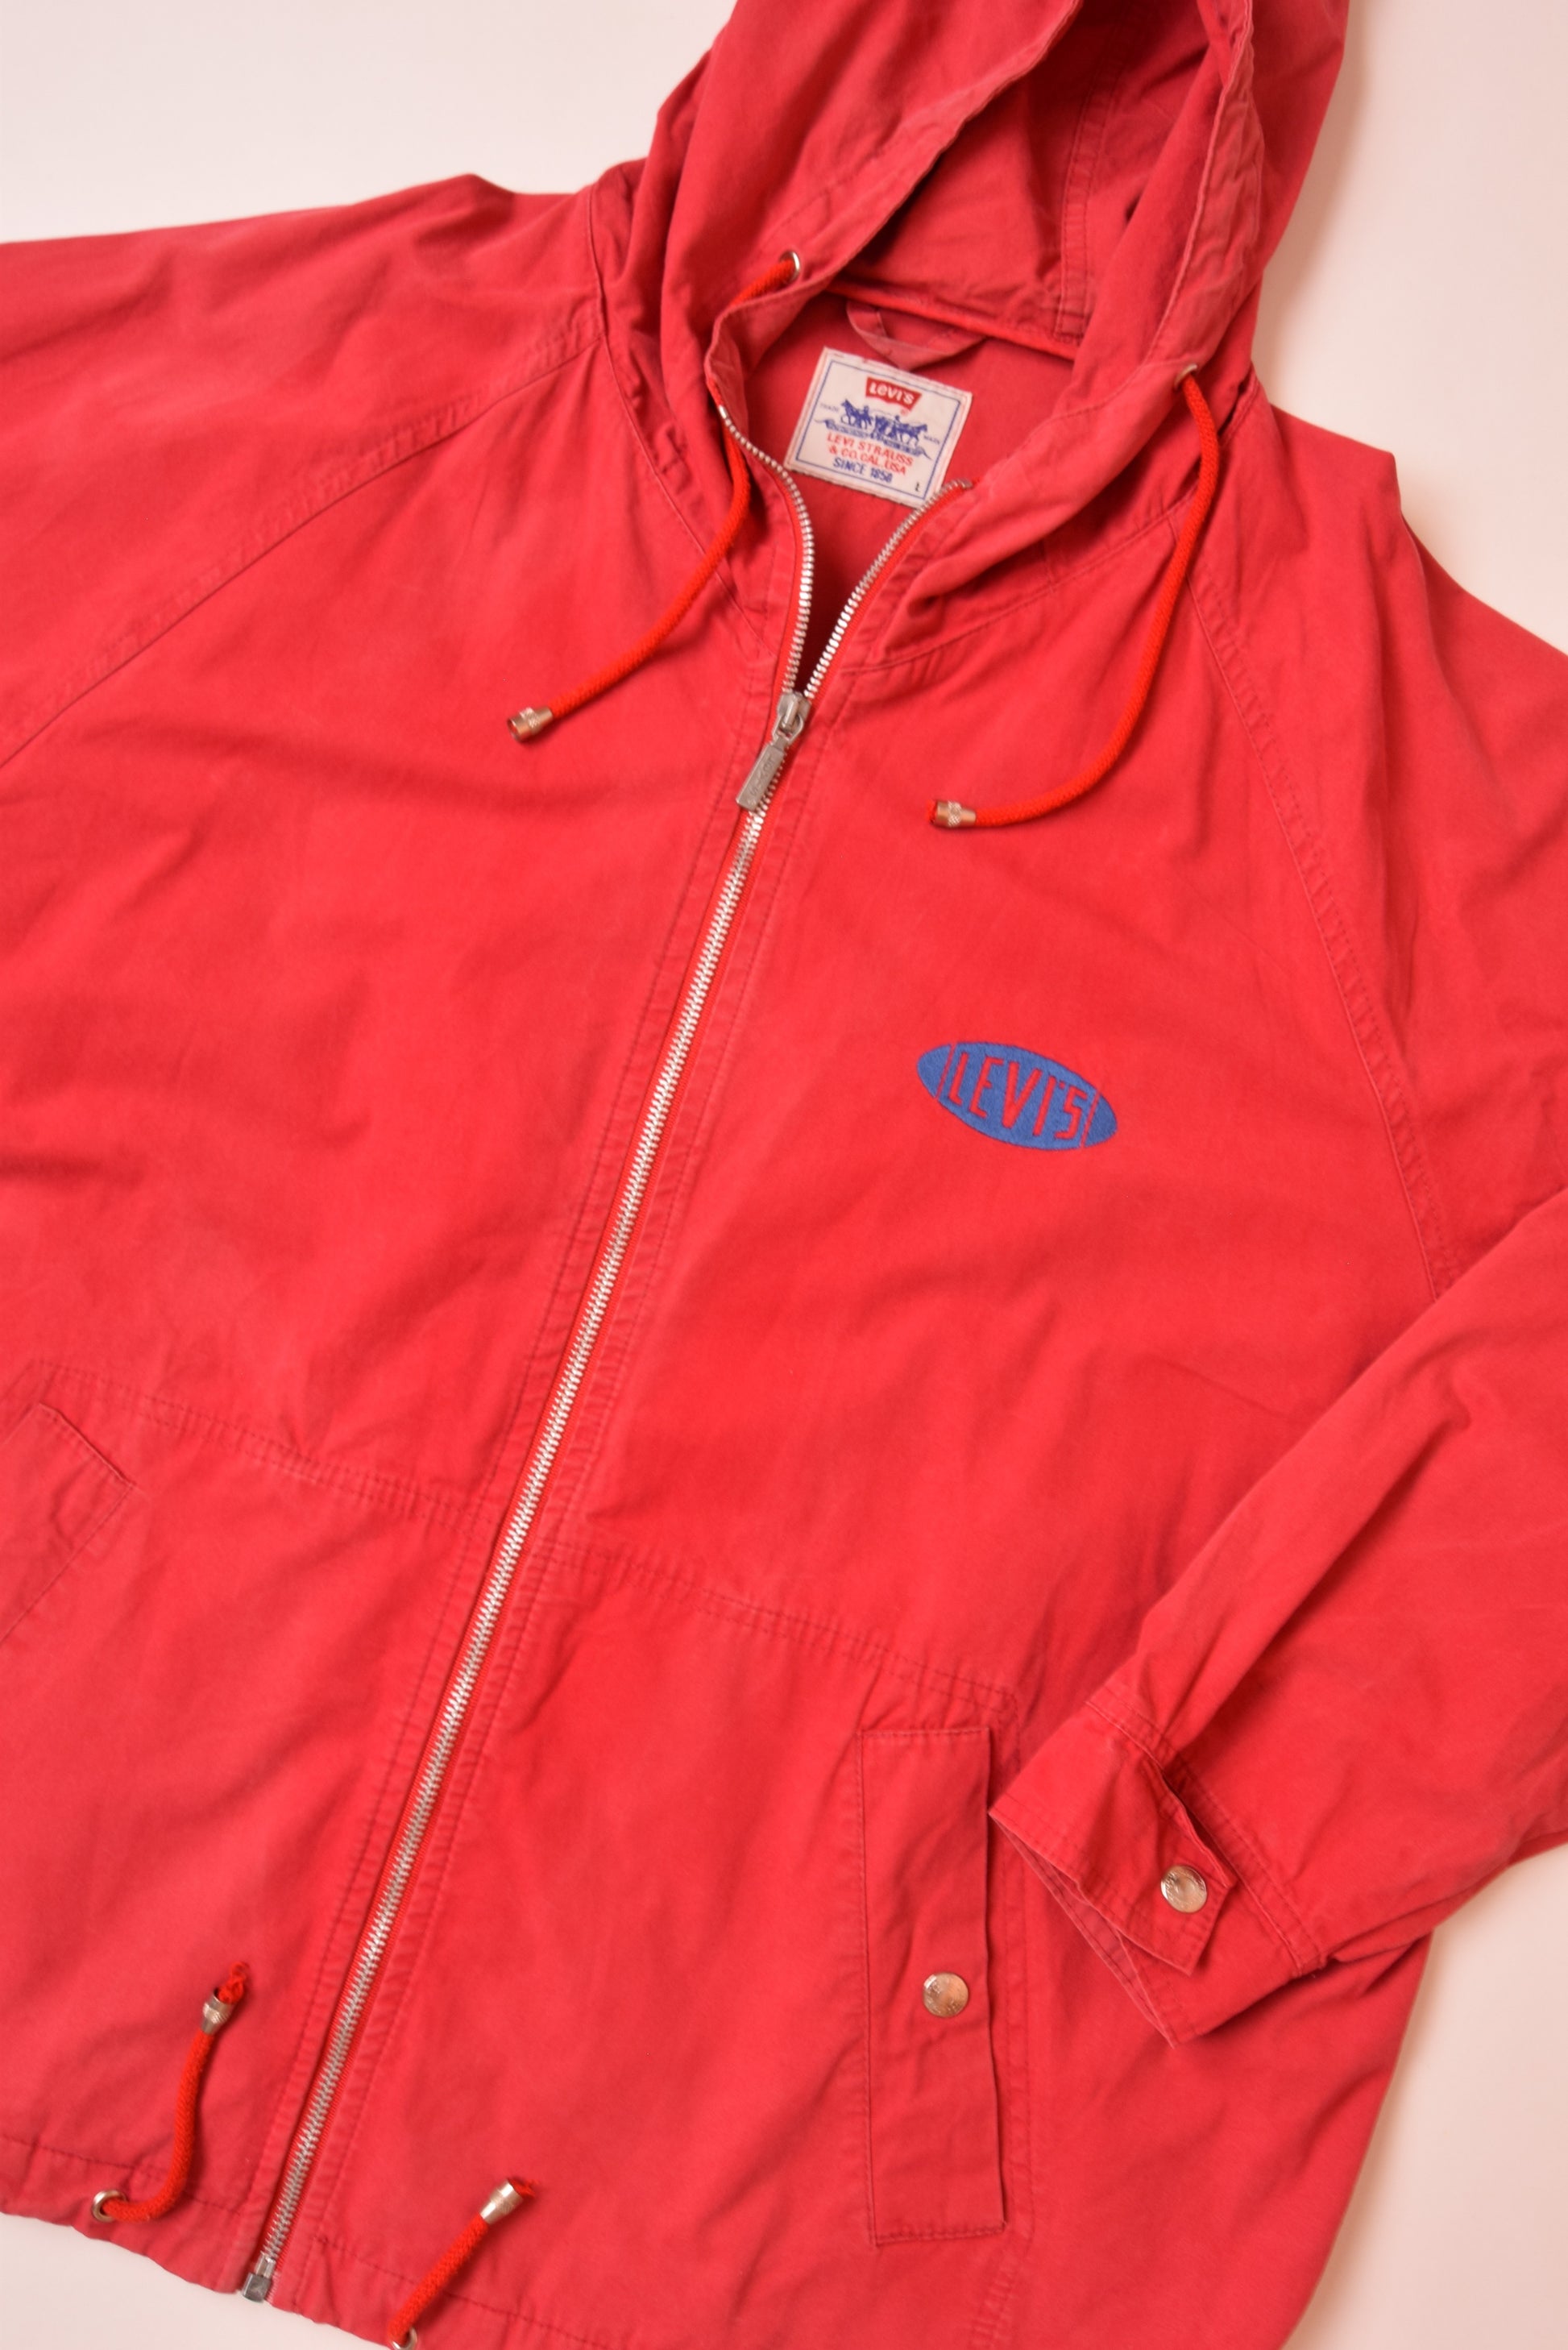 Vintage Levi's Jacket 90's Red Size L